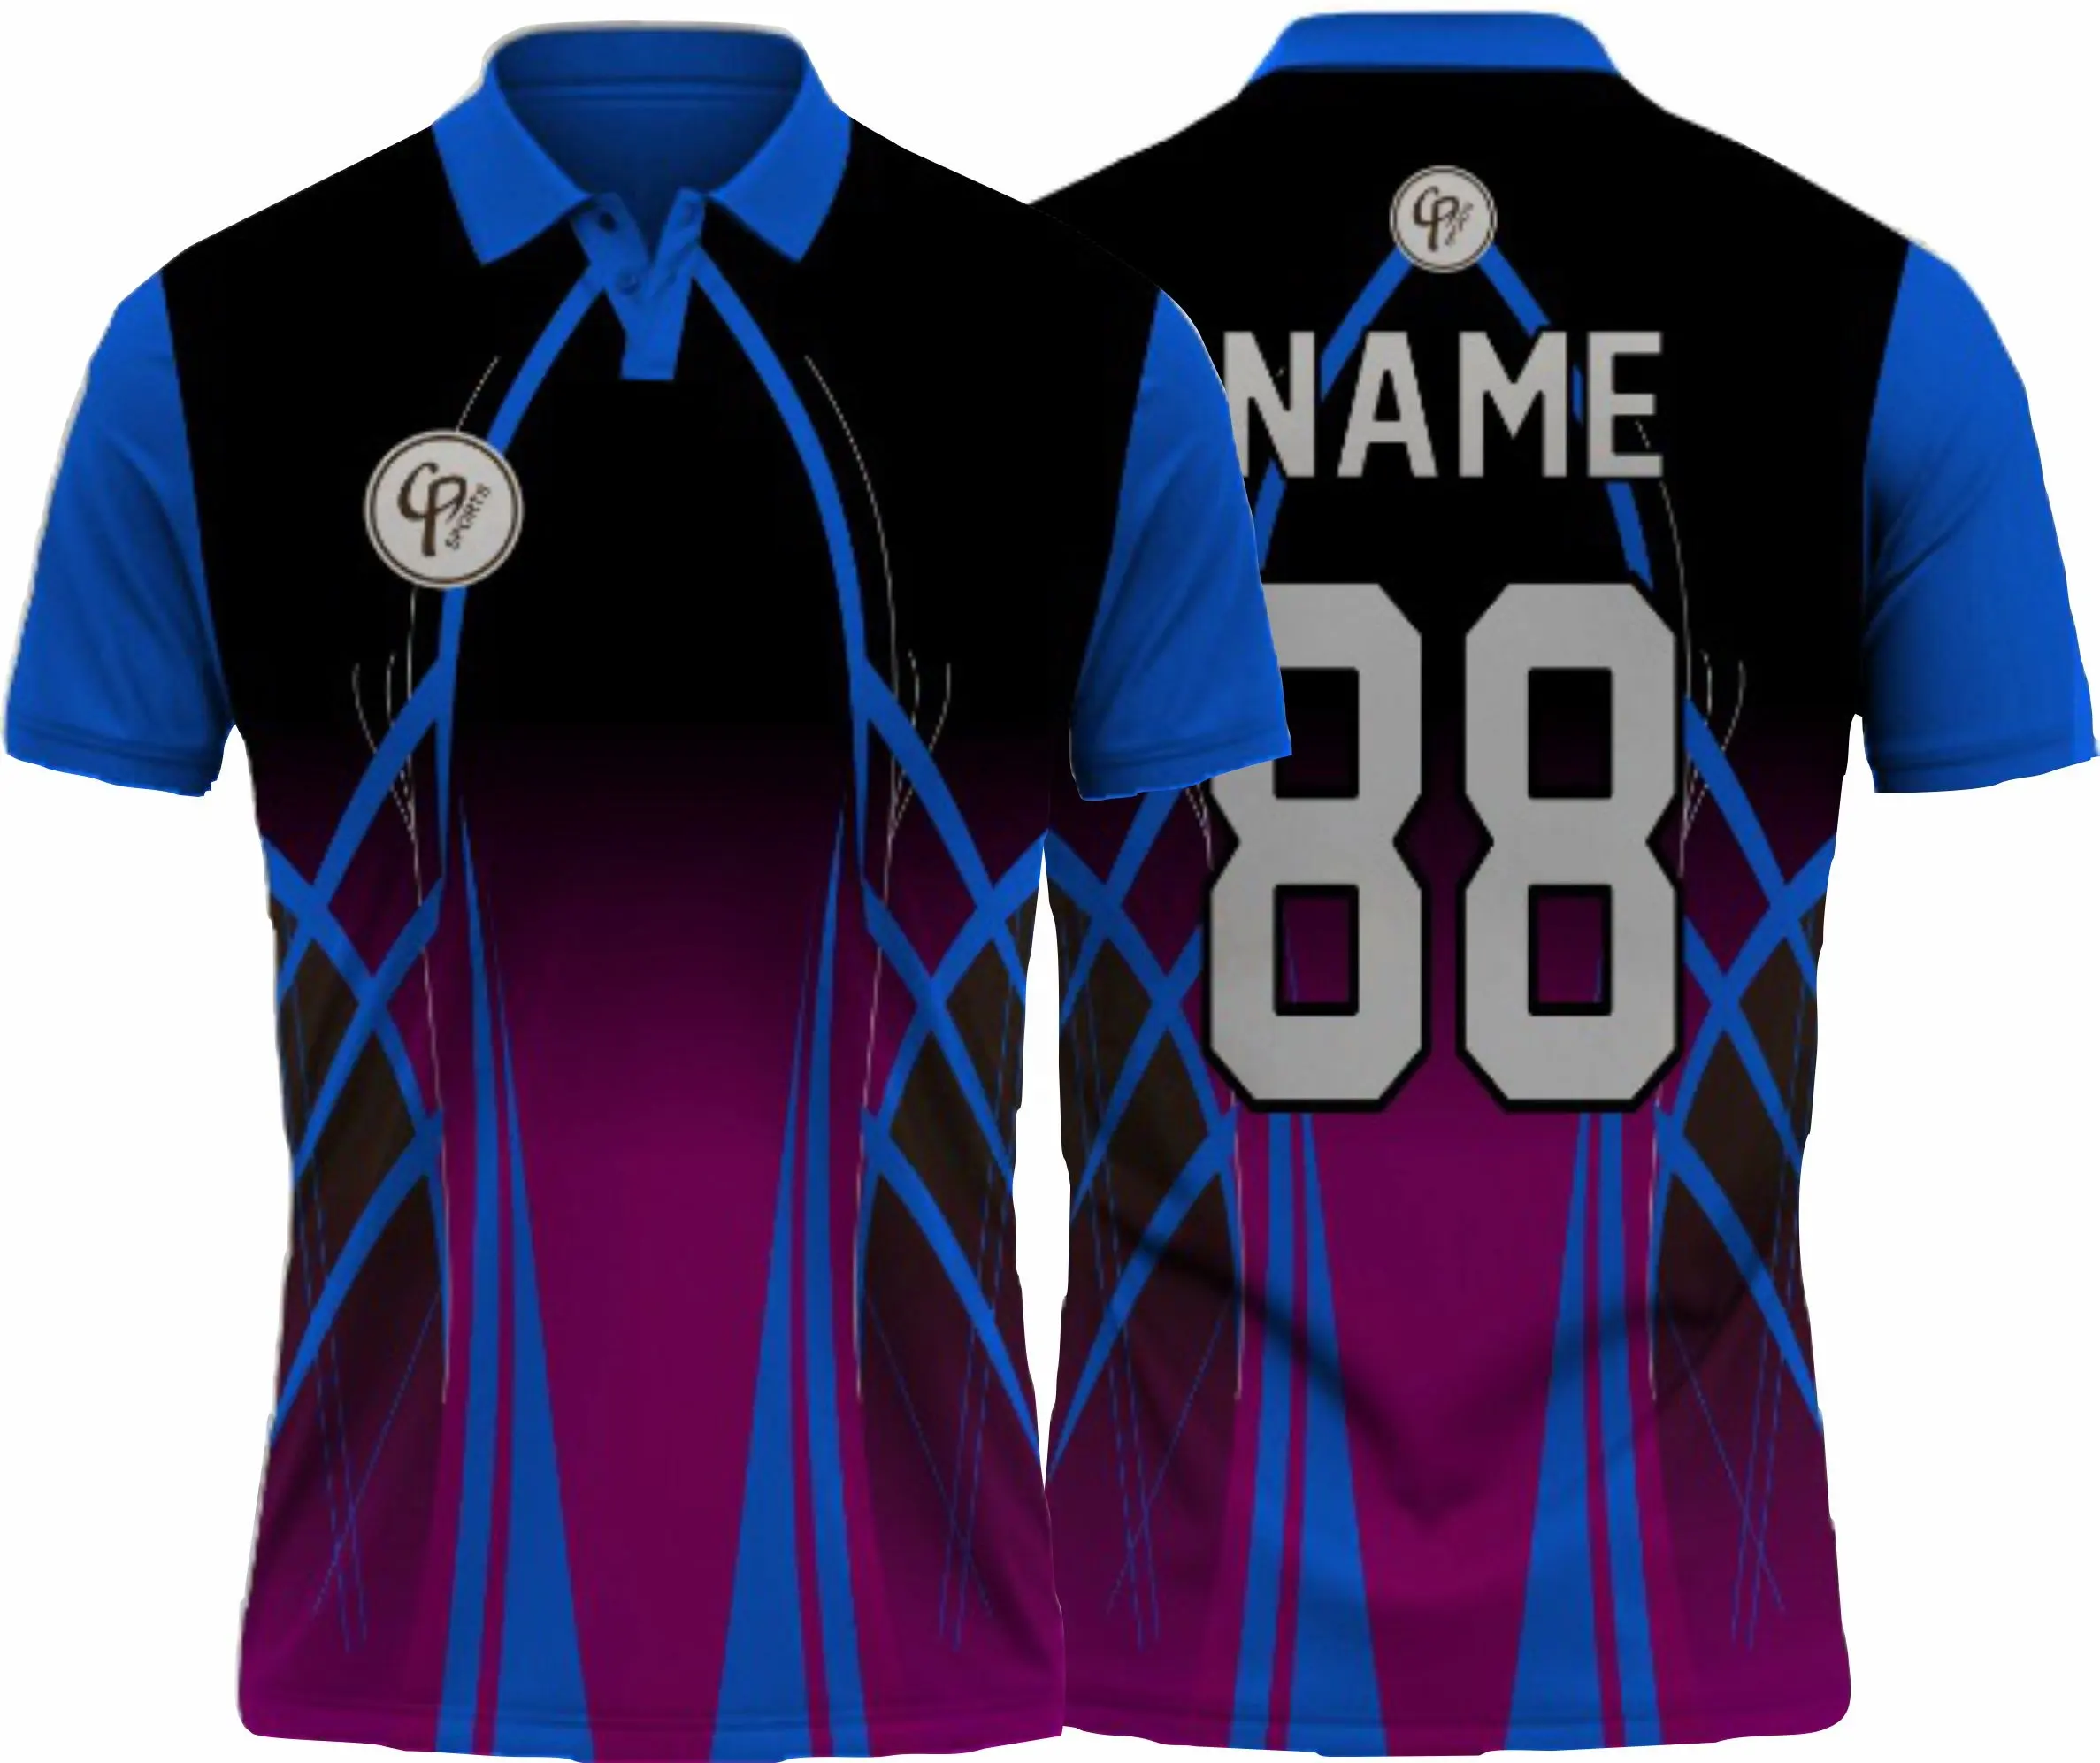 High Quality Sublimation printed digital design mock up uniform for cricket including trouser shirt and